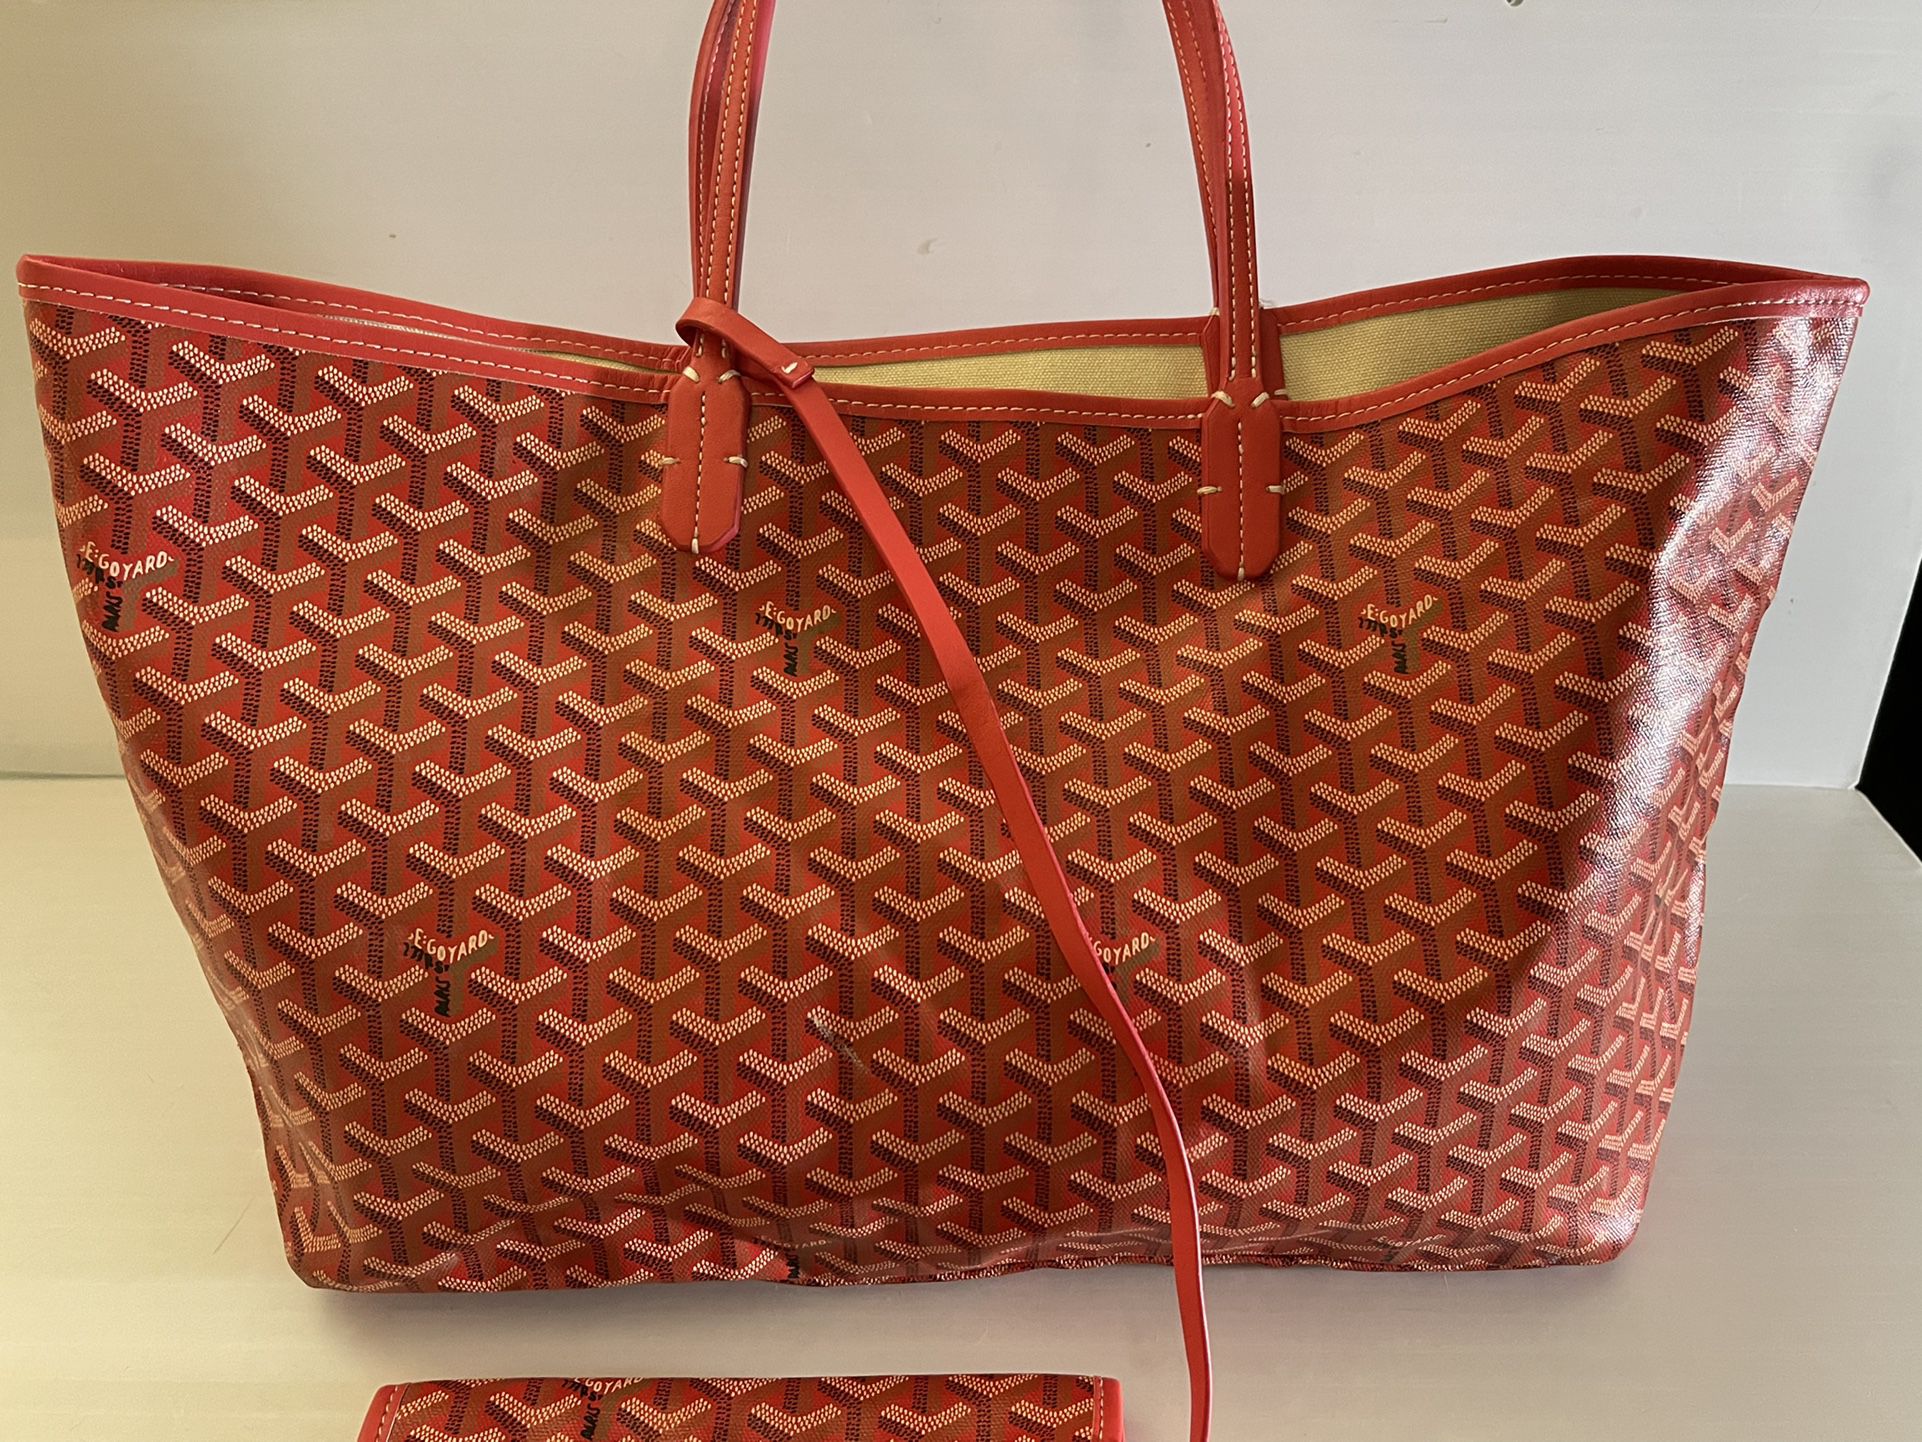 Authentic Goyard bag for Sale in Philadelphia, PA - OfferUp